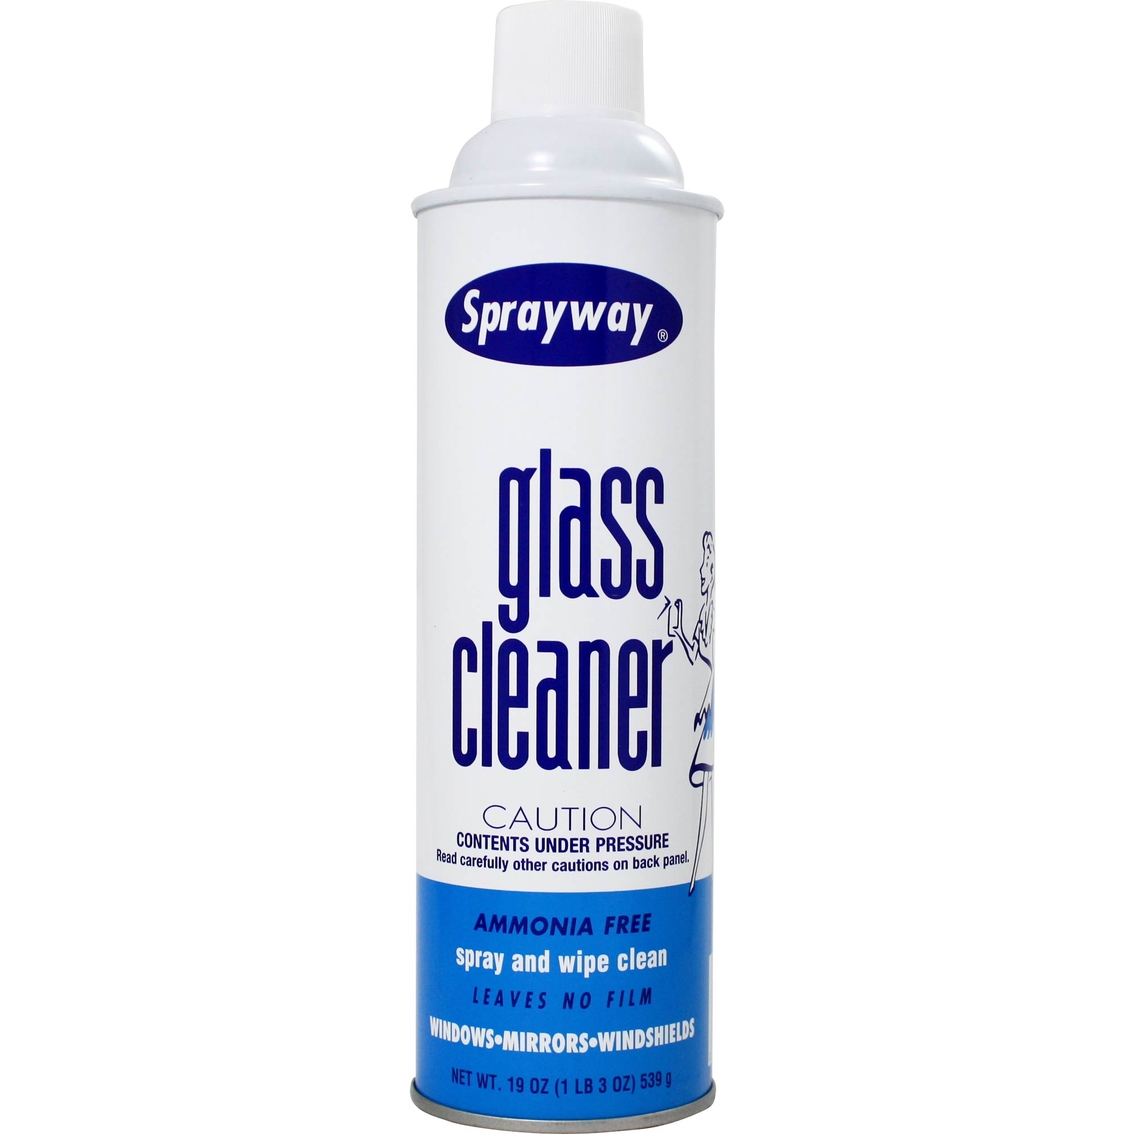 Sprayway Glass Cleaner 12 pk, 19 oz. - Image 2 of 2